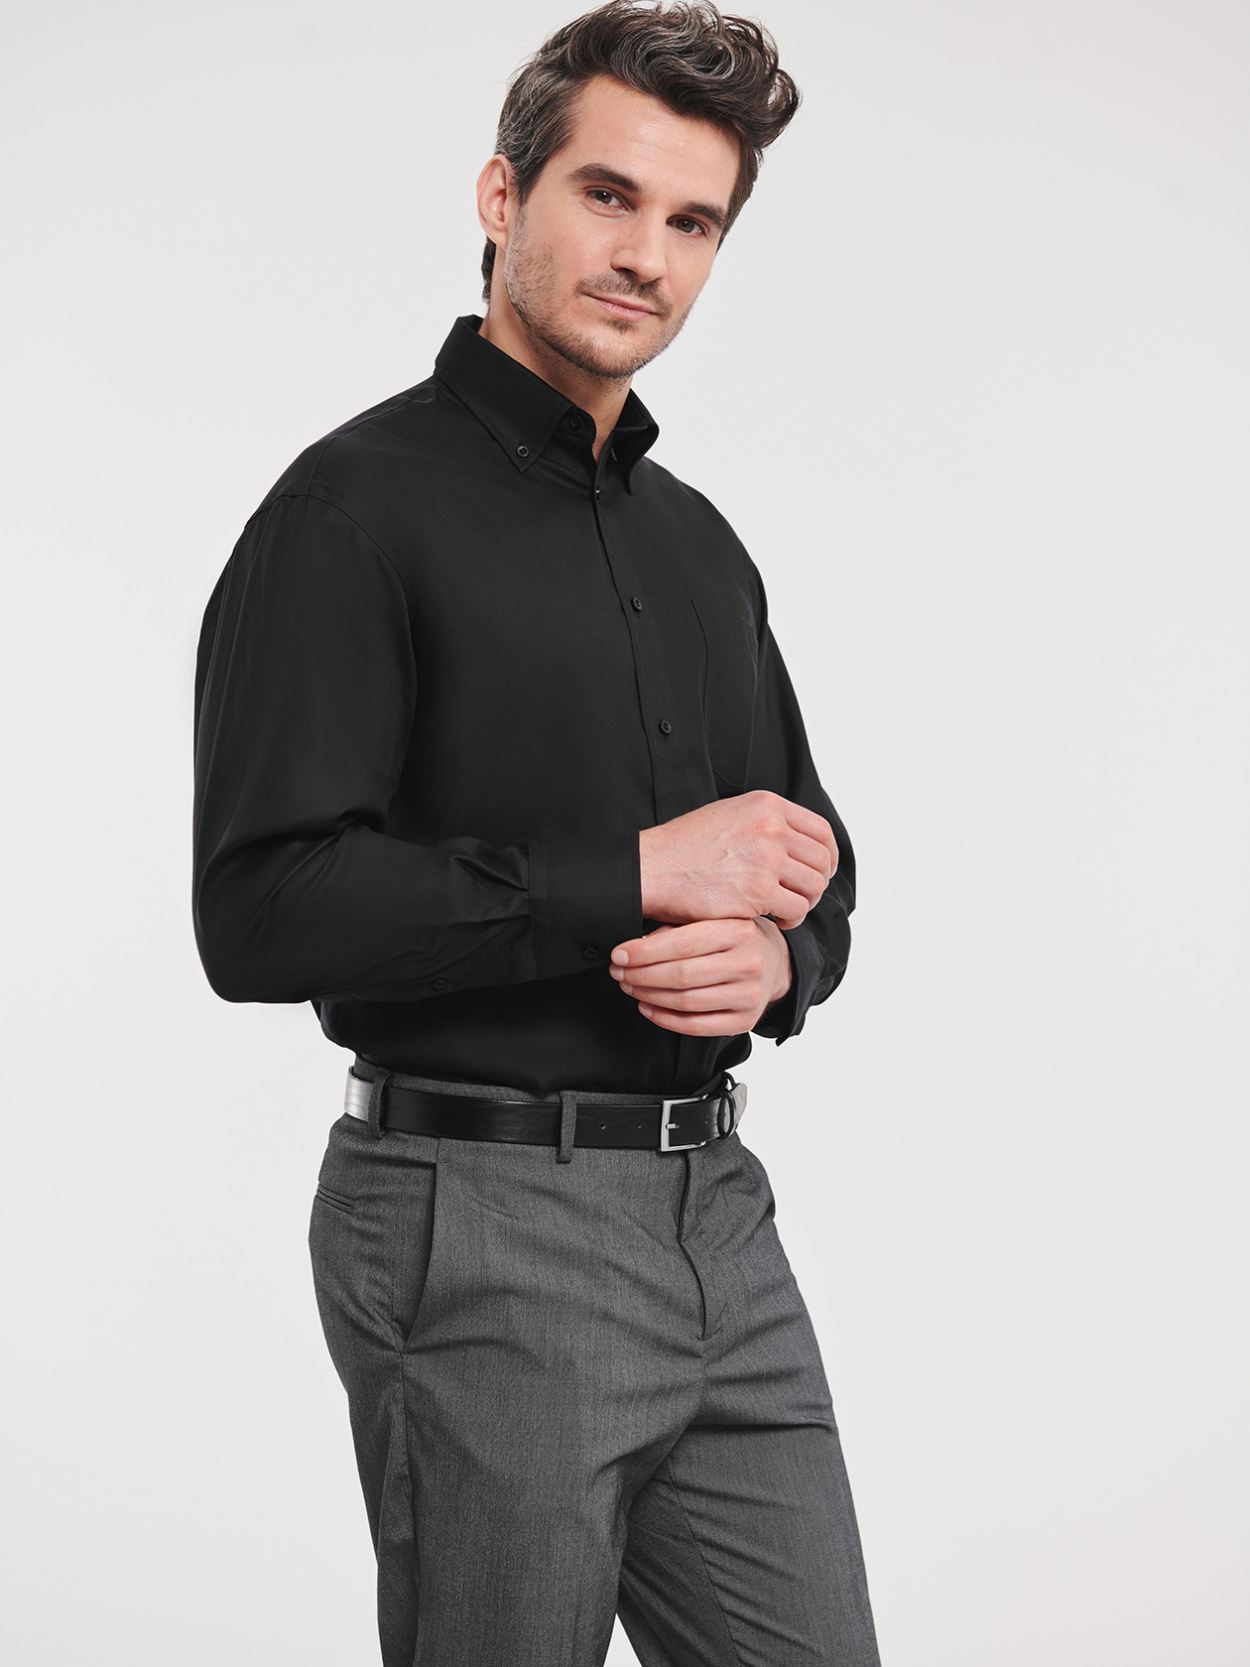 956M Men's Long Sleeve Ultimate Non Iron Luxury Shirt Image 3